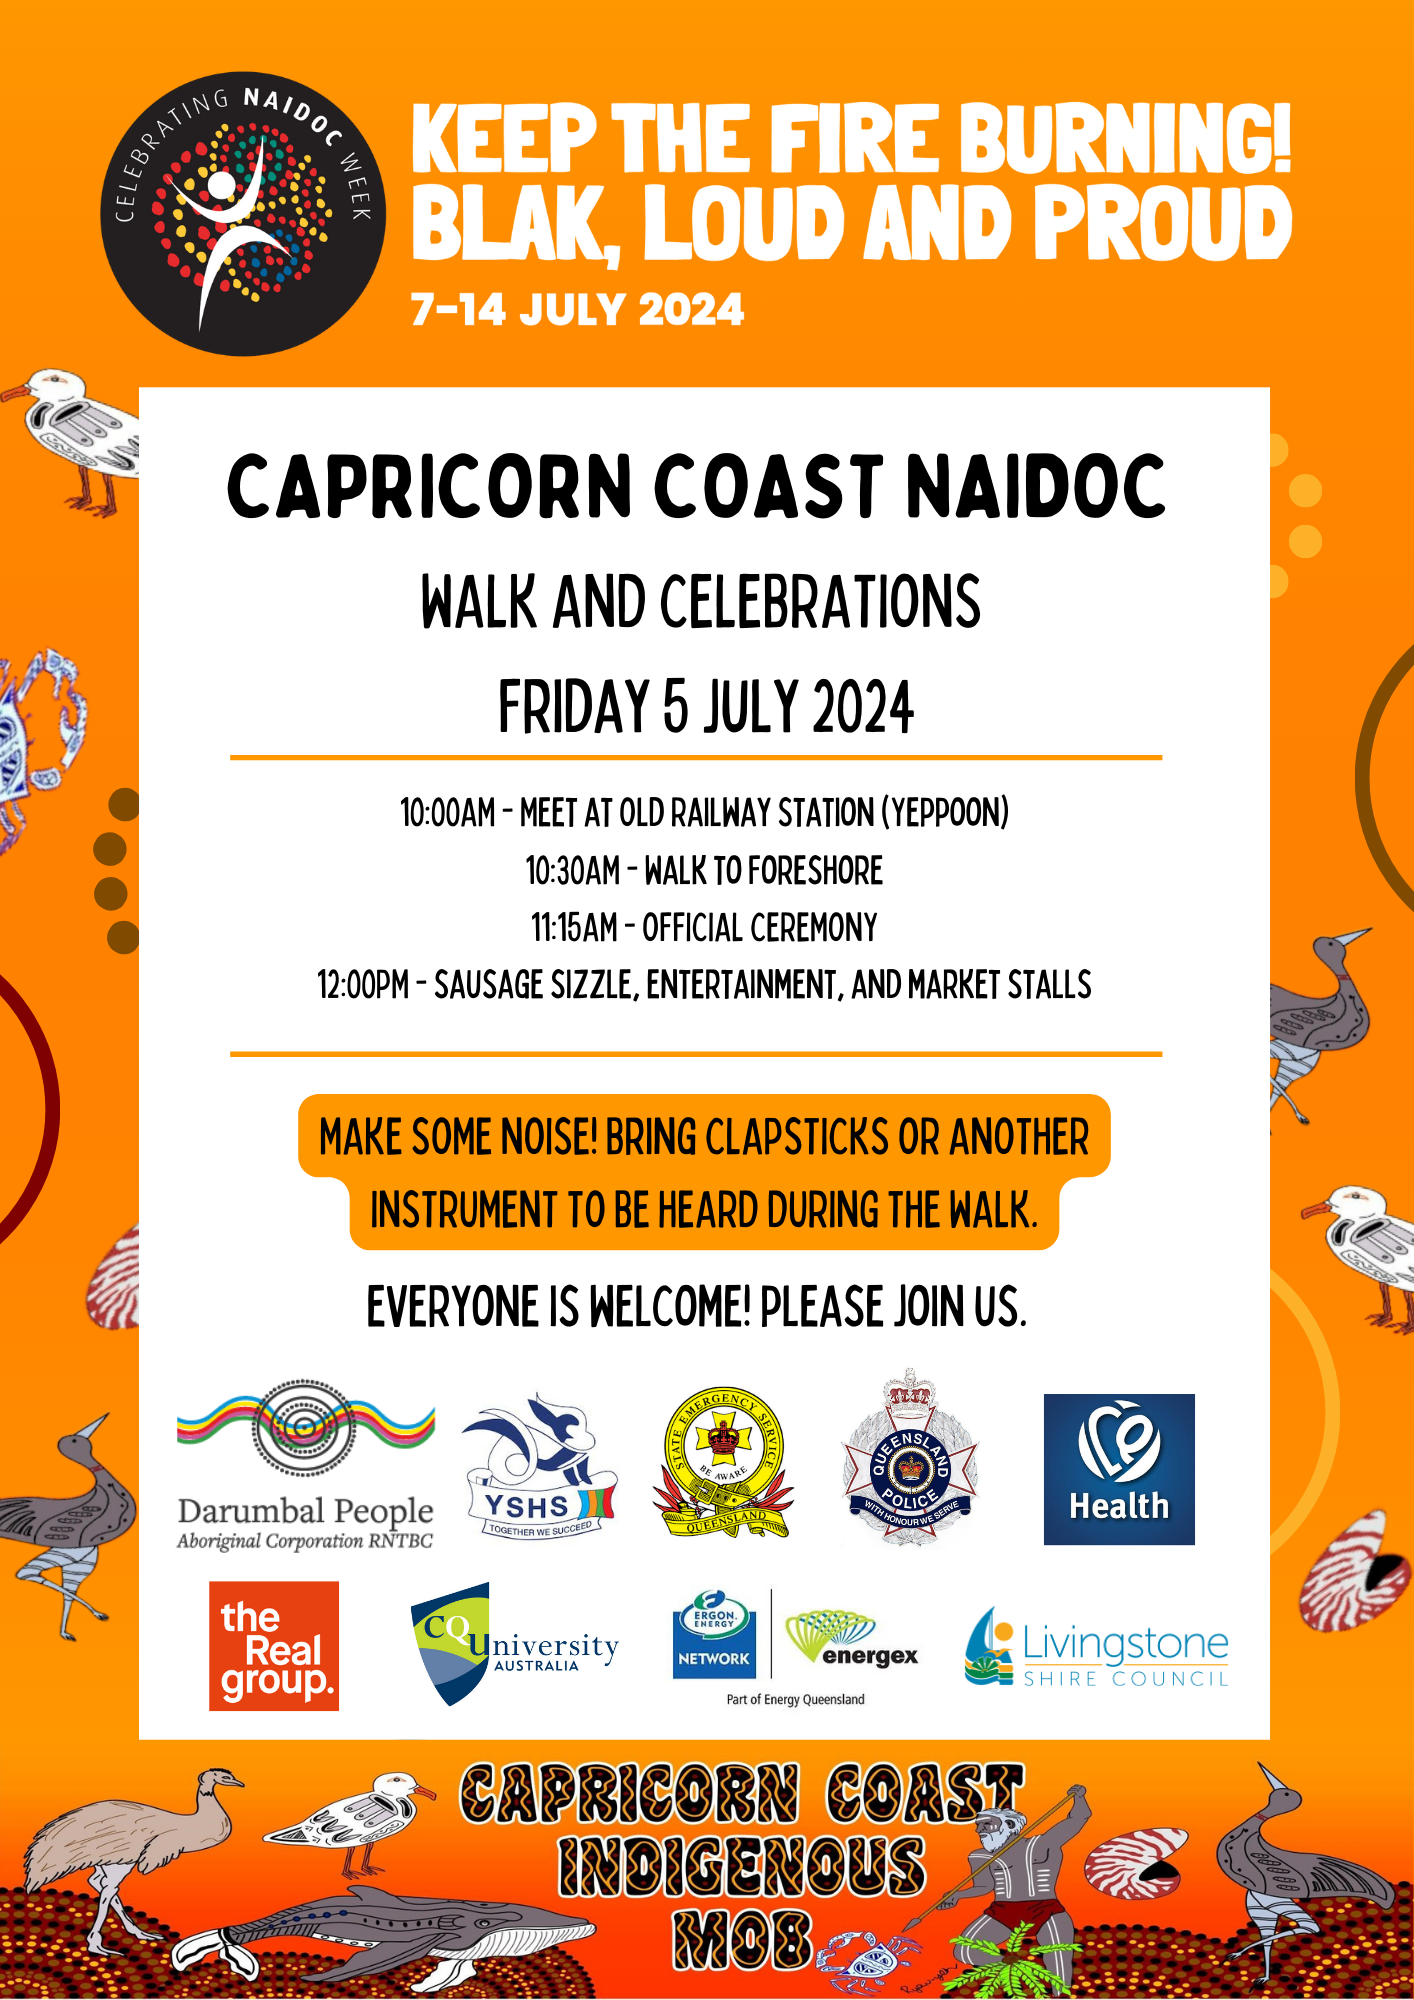 Capricorn coast naidoc walk and celebrations 2024